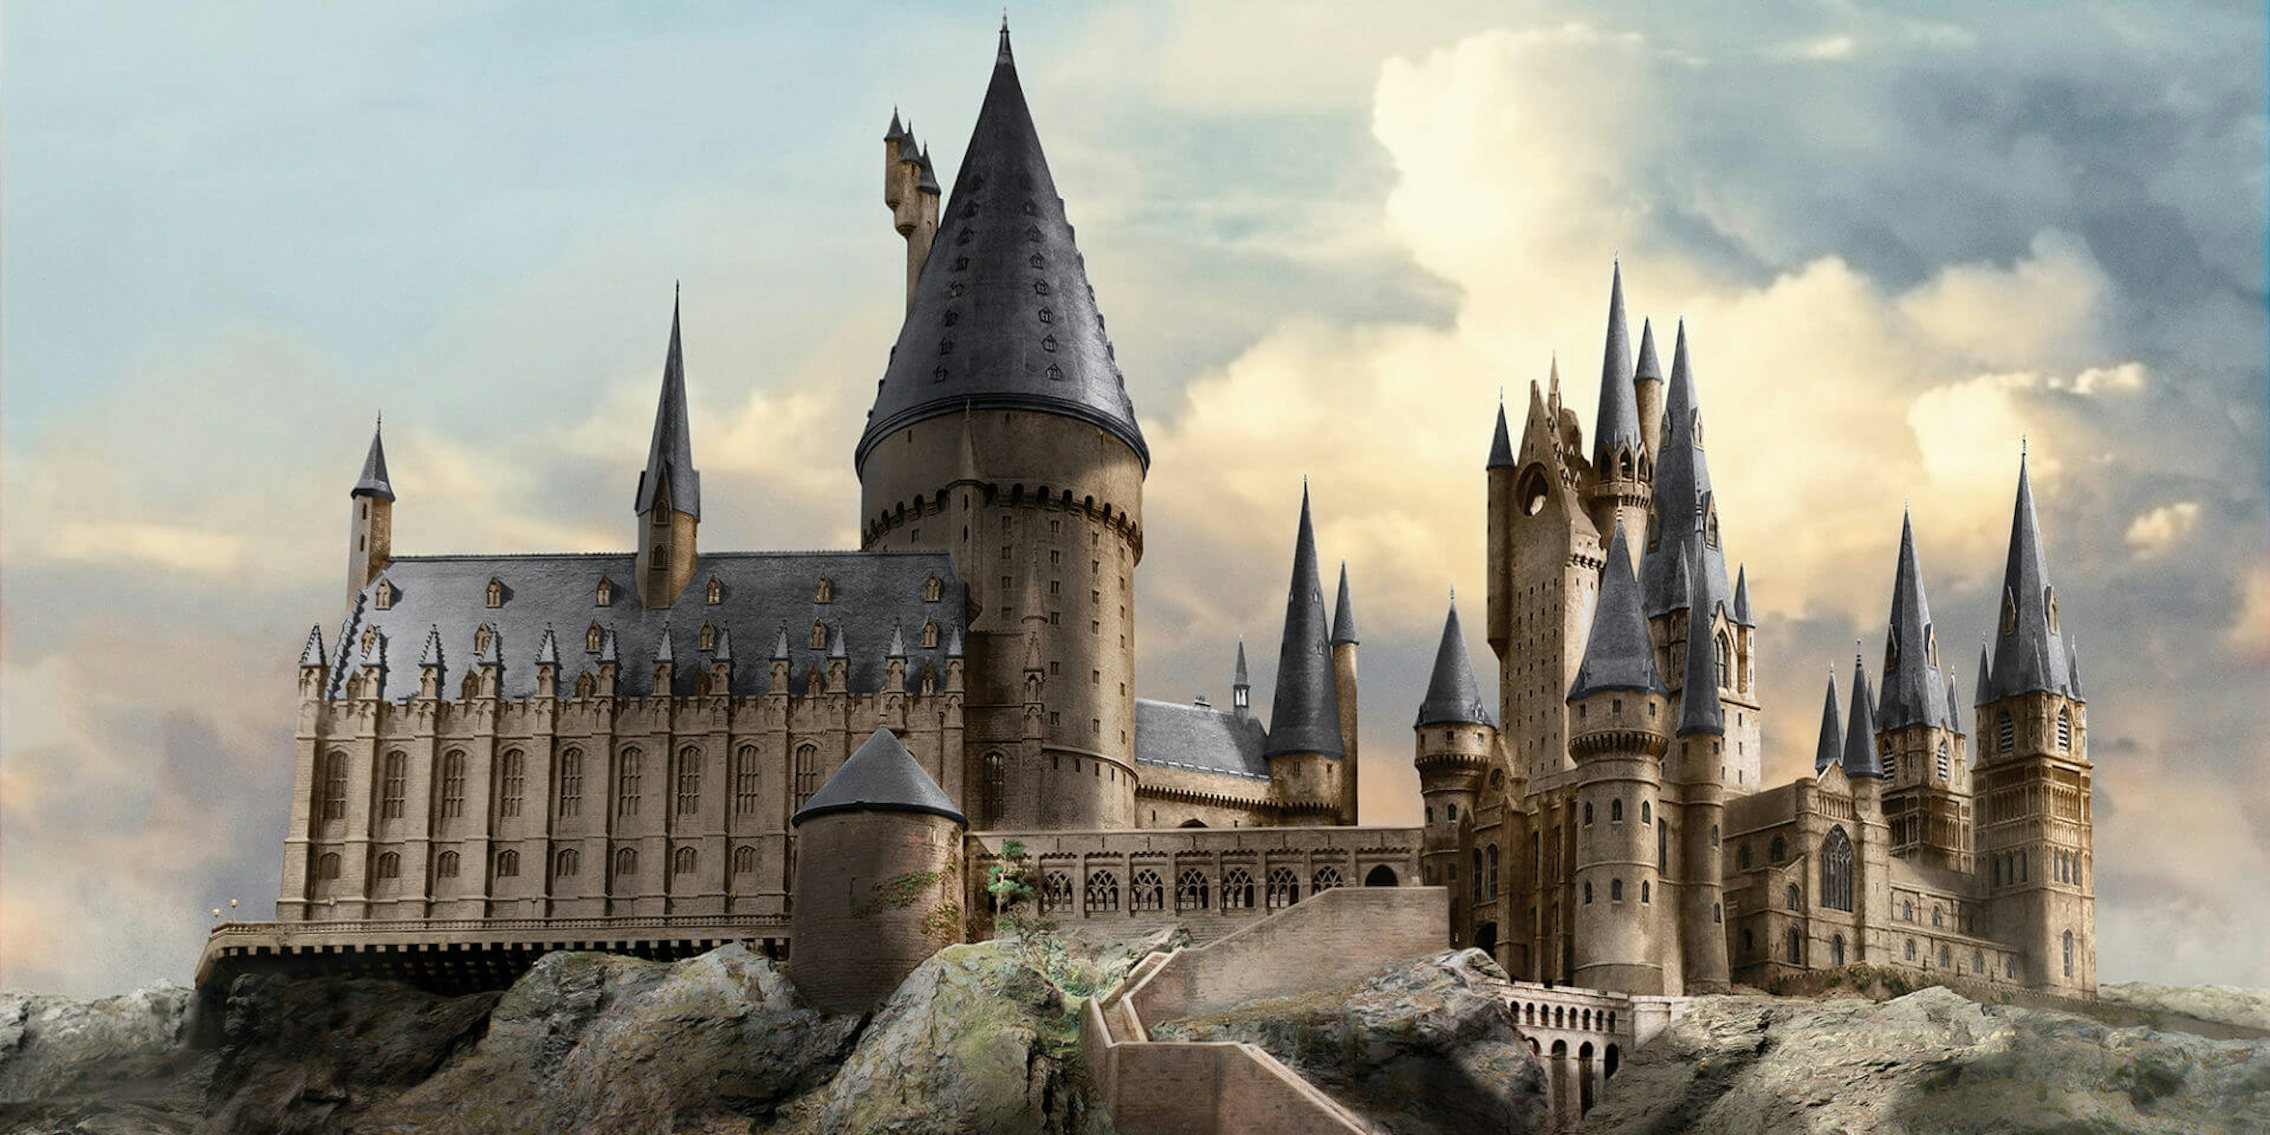 Pottermore Announces Move to WizardingWorld.com -  «